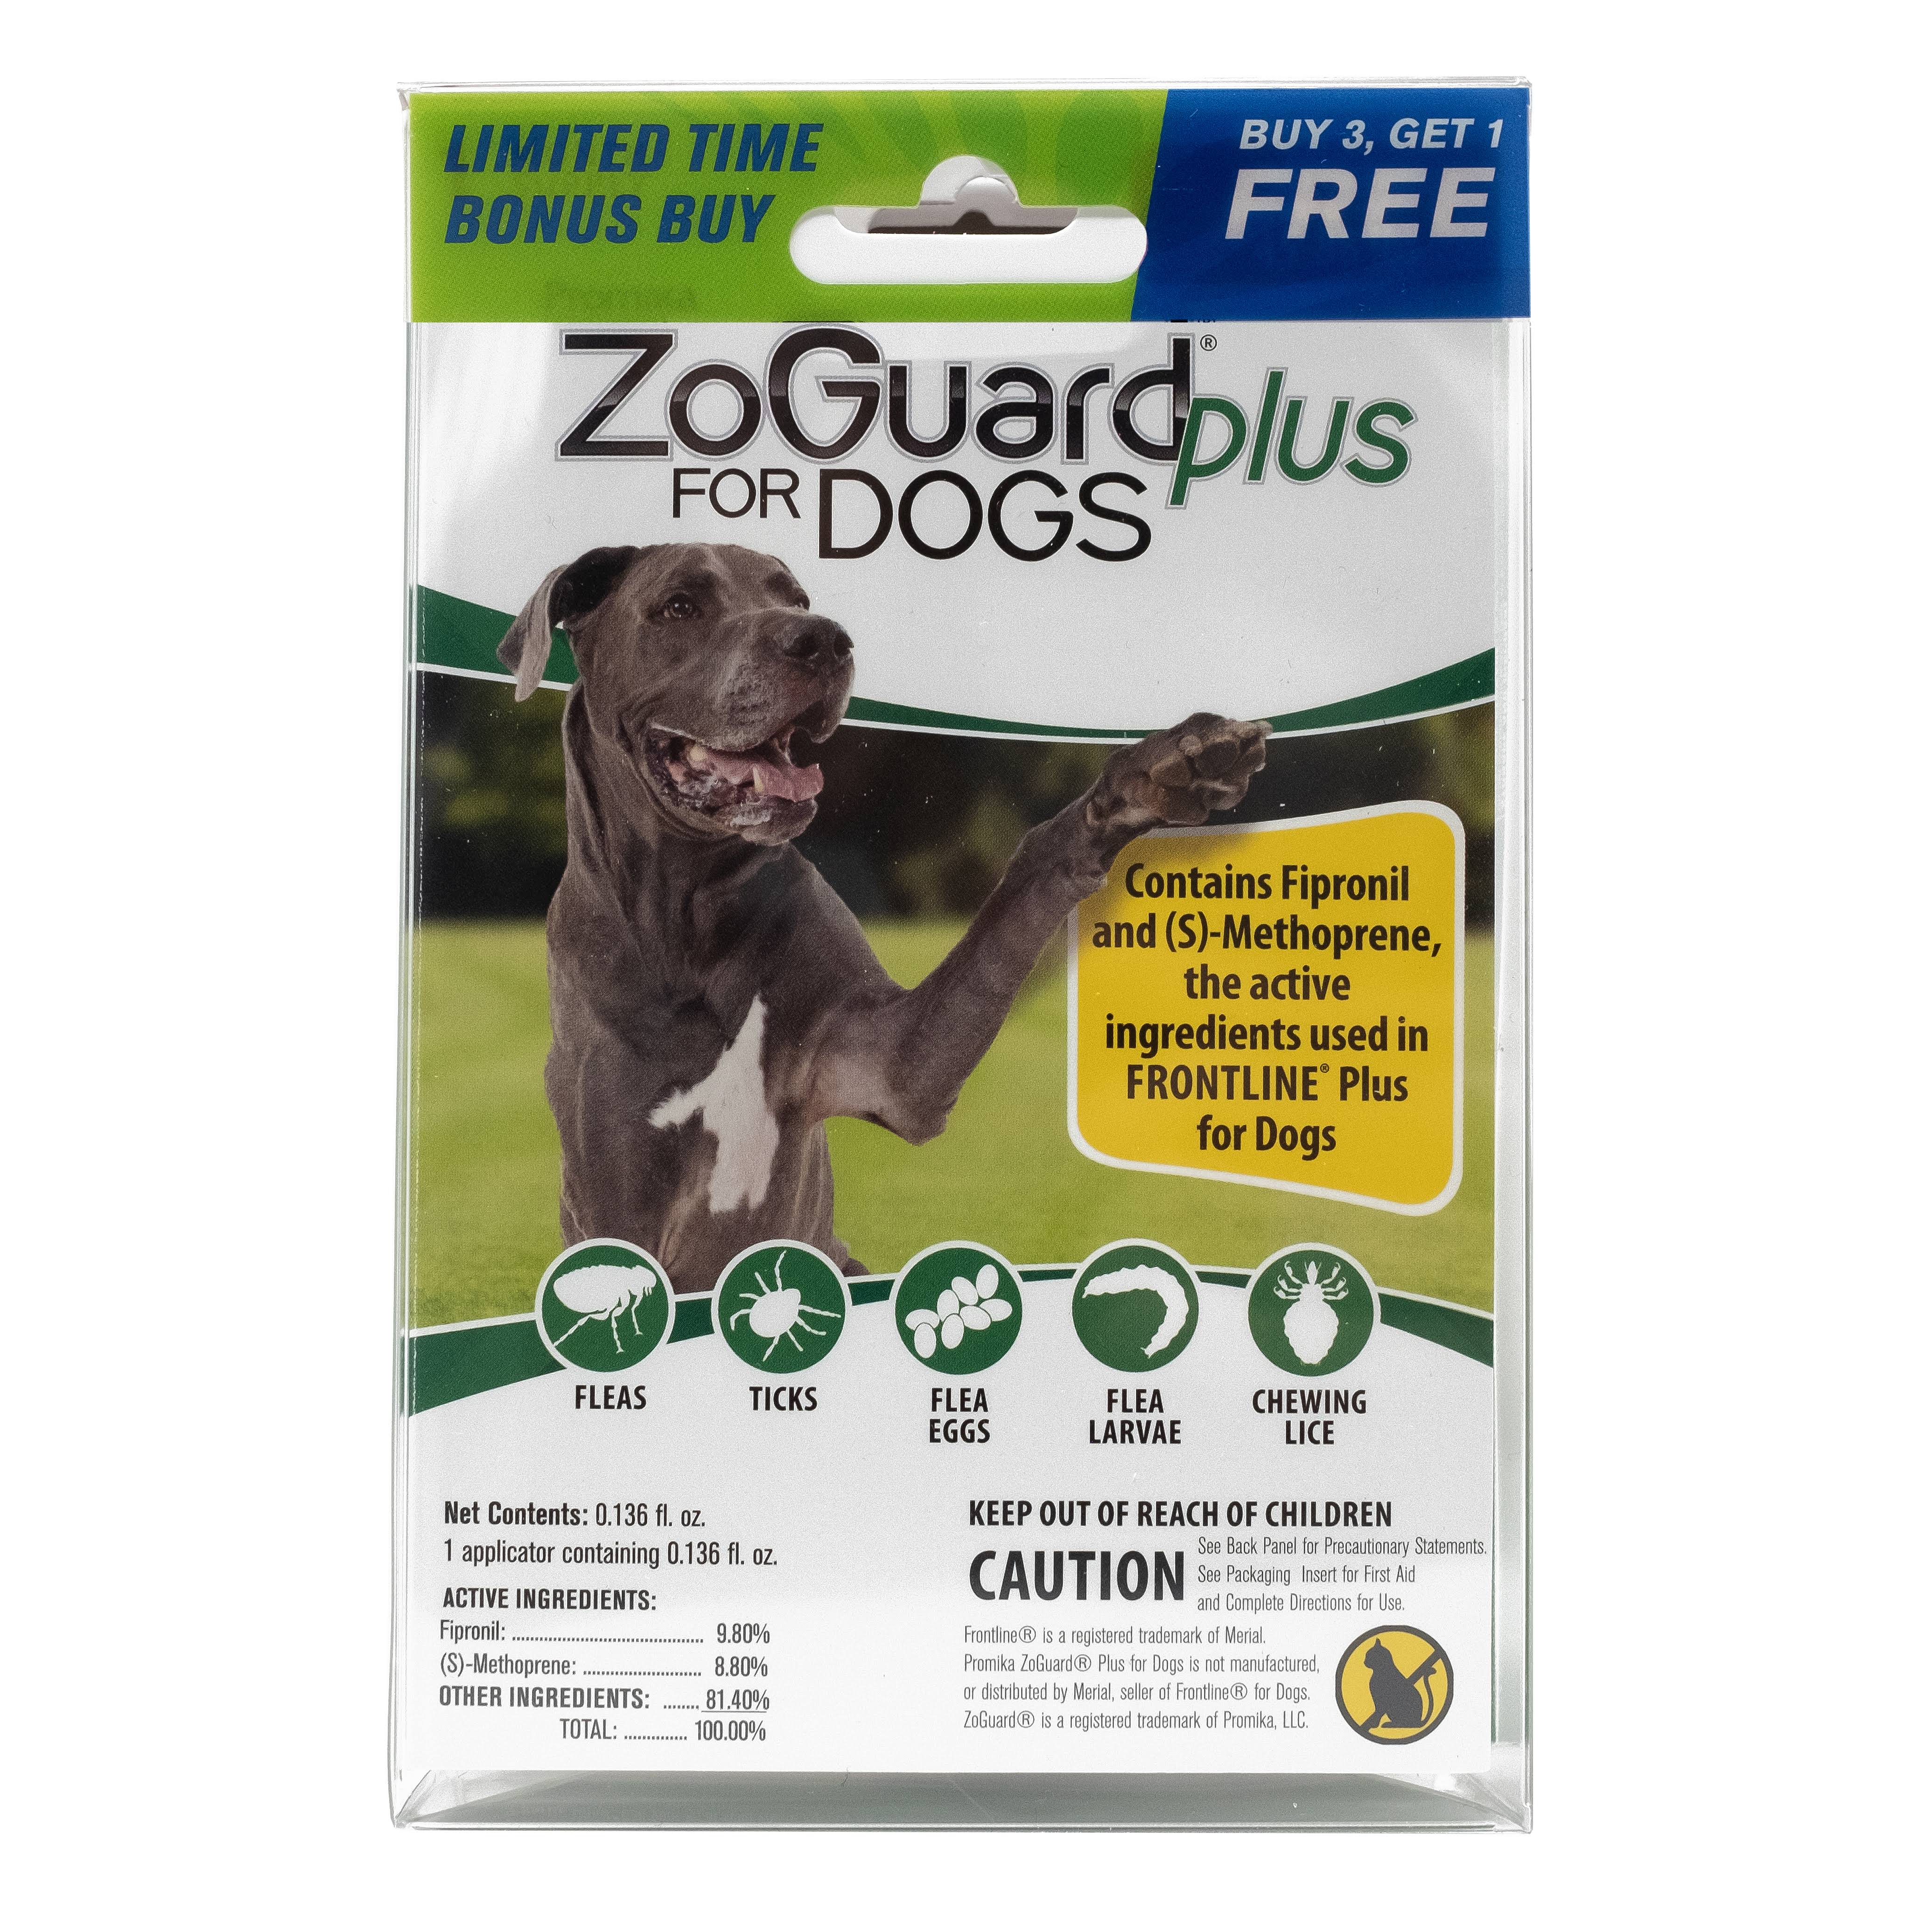 ZoGuard Plus Drops for Dogs Flea and Tick Treatment - 89-132lb, 3pk